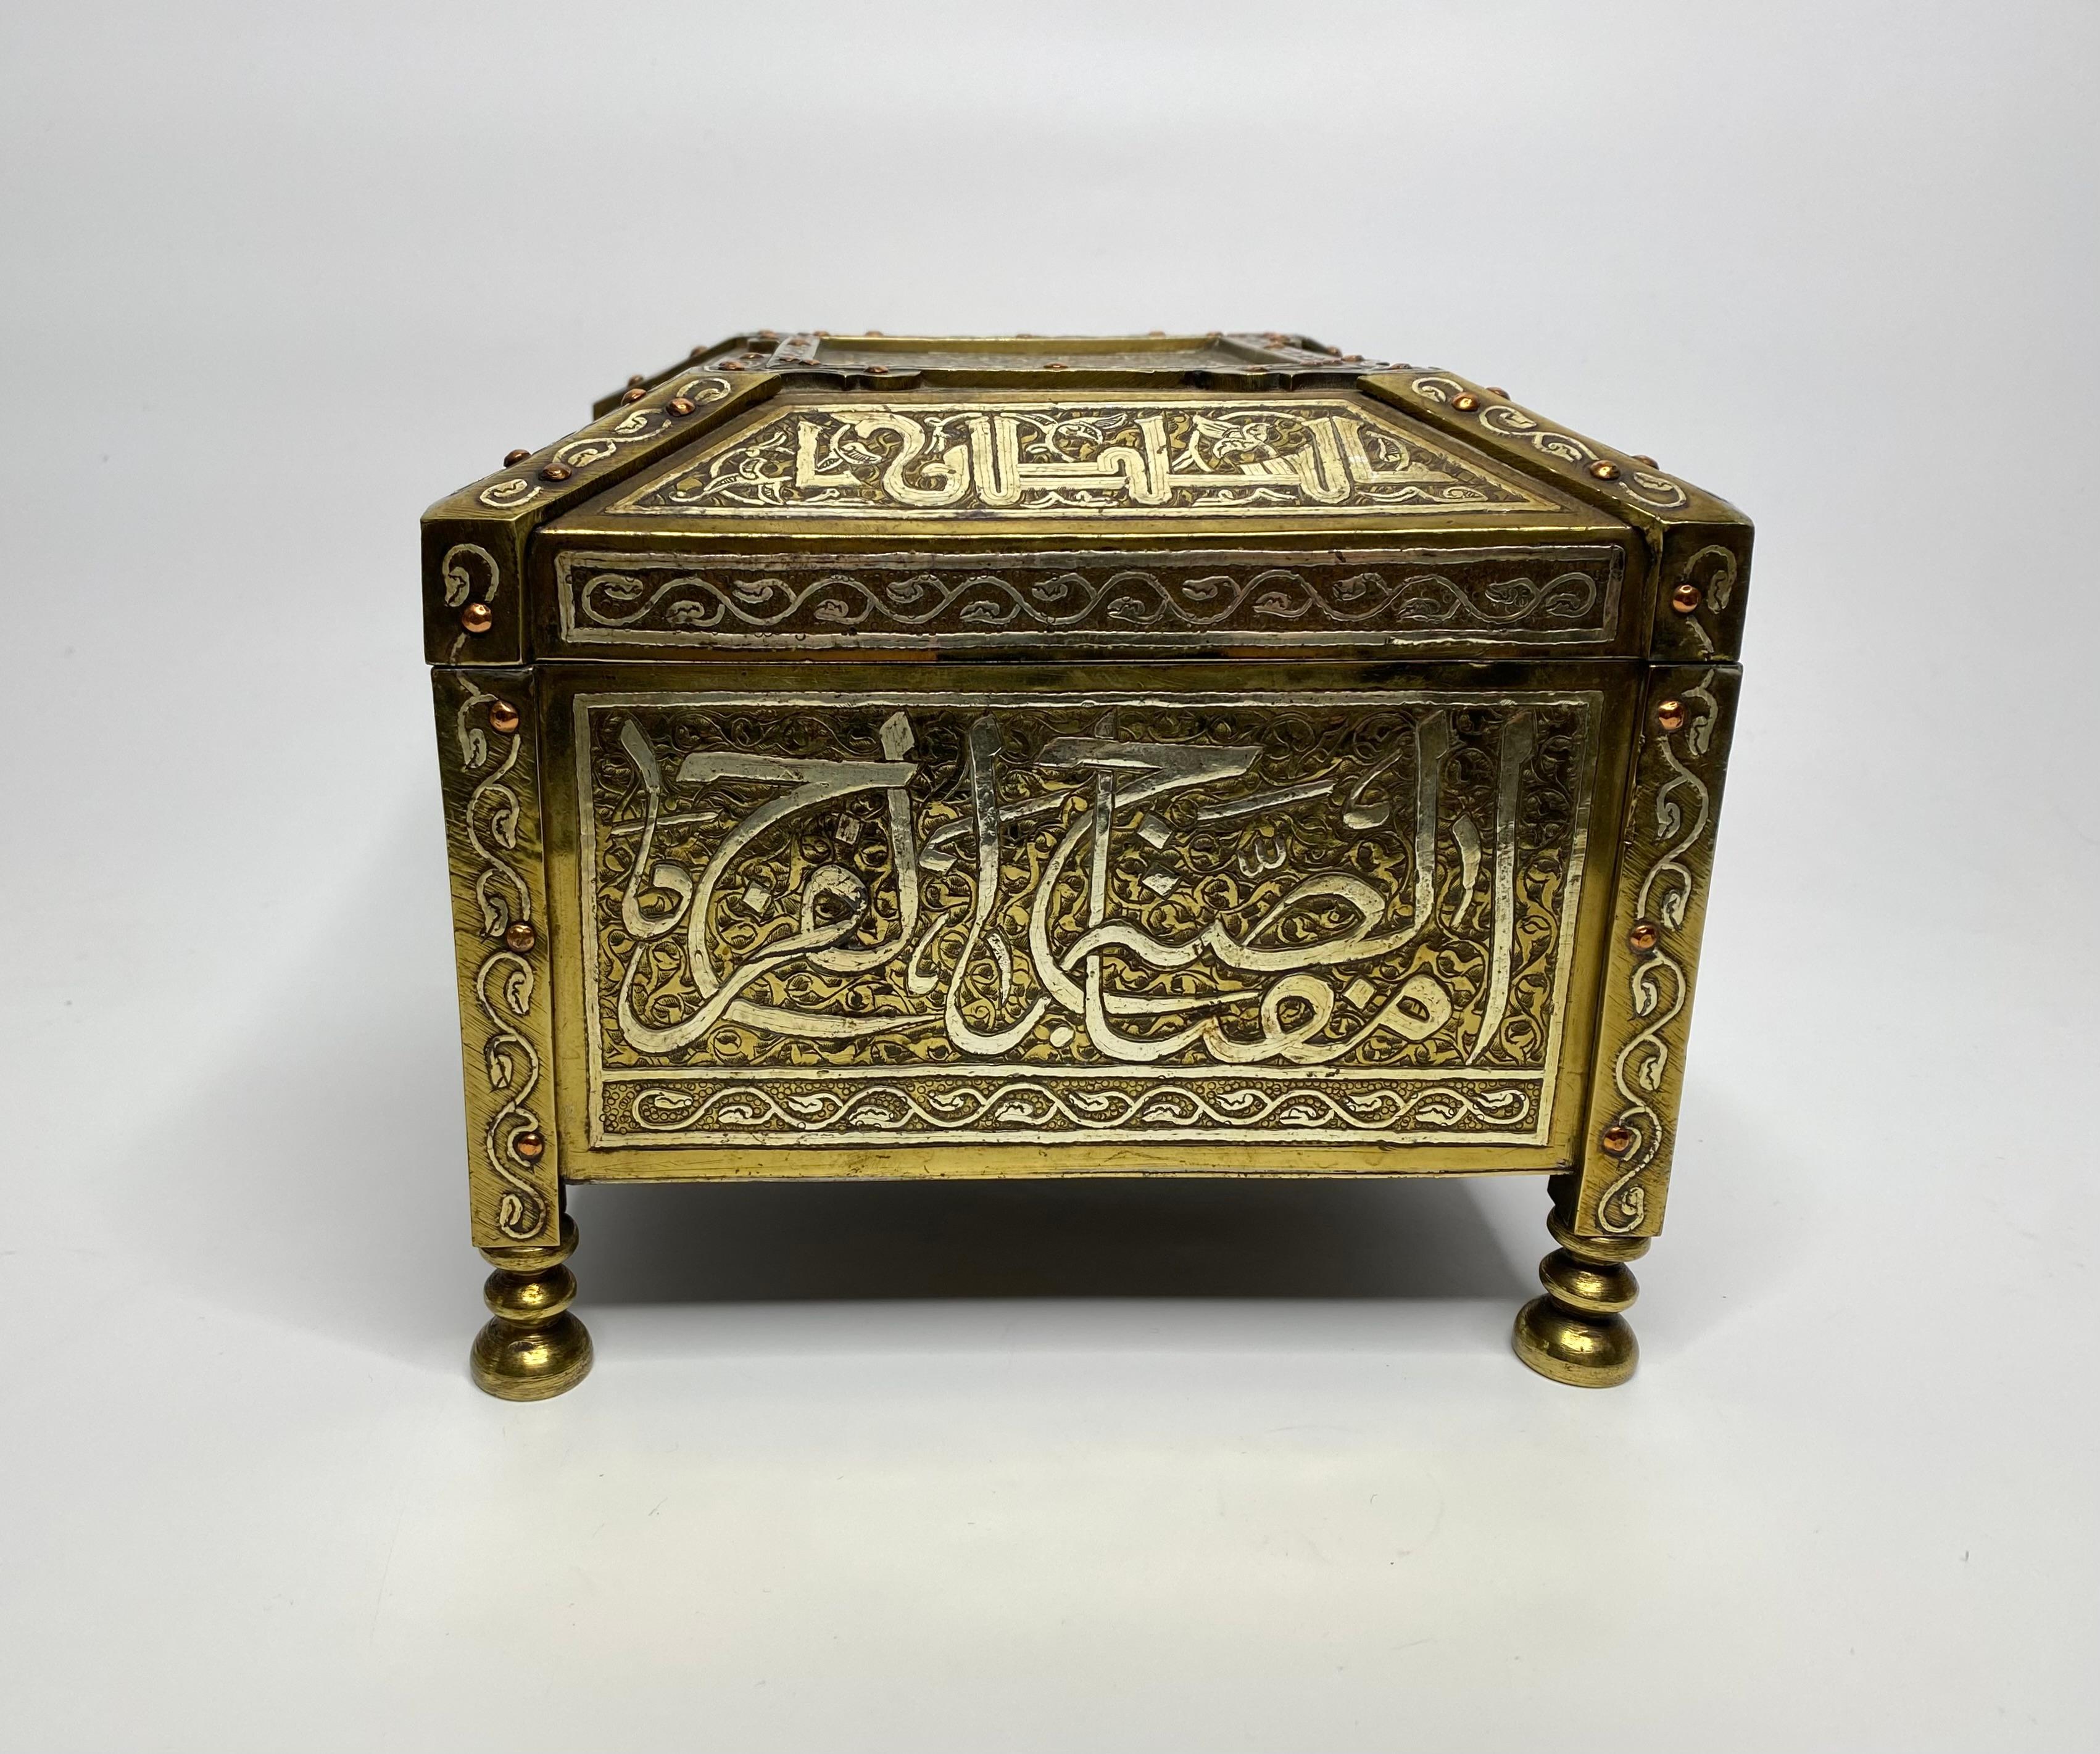 Syrian Mamluk revival Quran casket, Damascus, c. 1900.